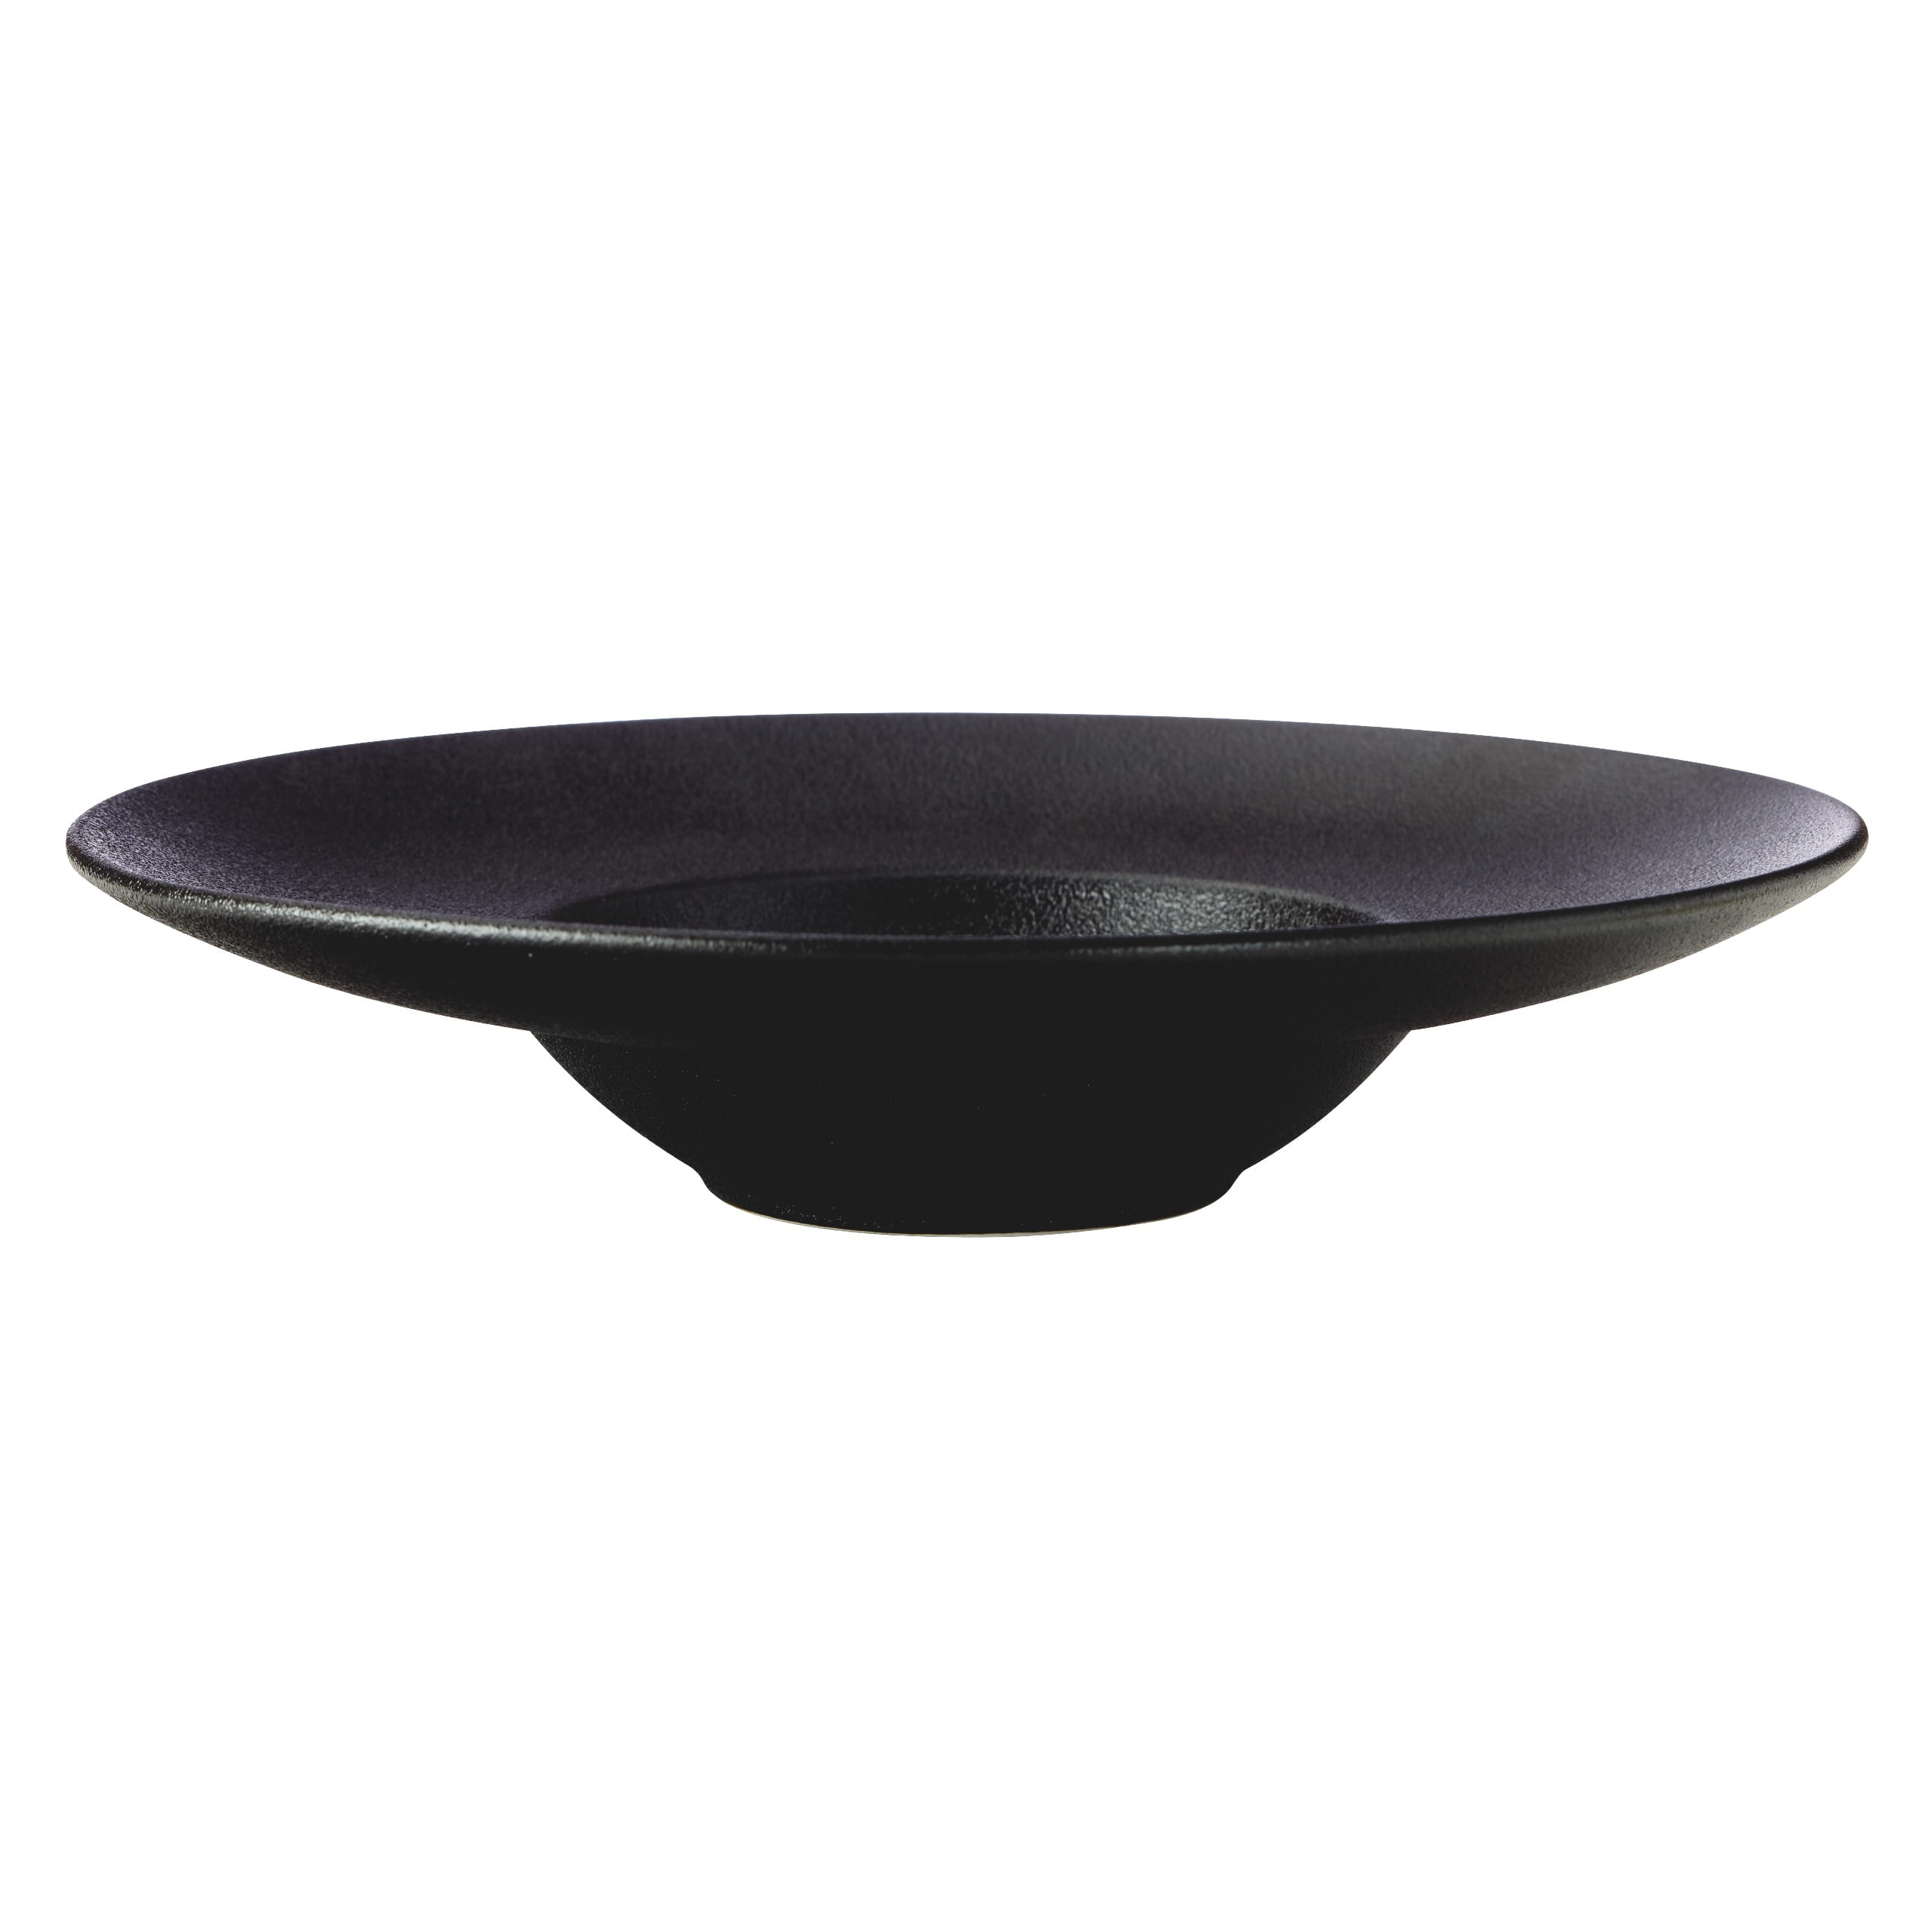 CAVIAR BLACK Teller tief, 28 cm, Keramik